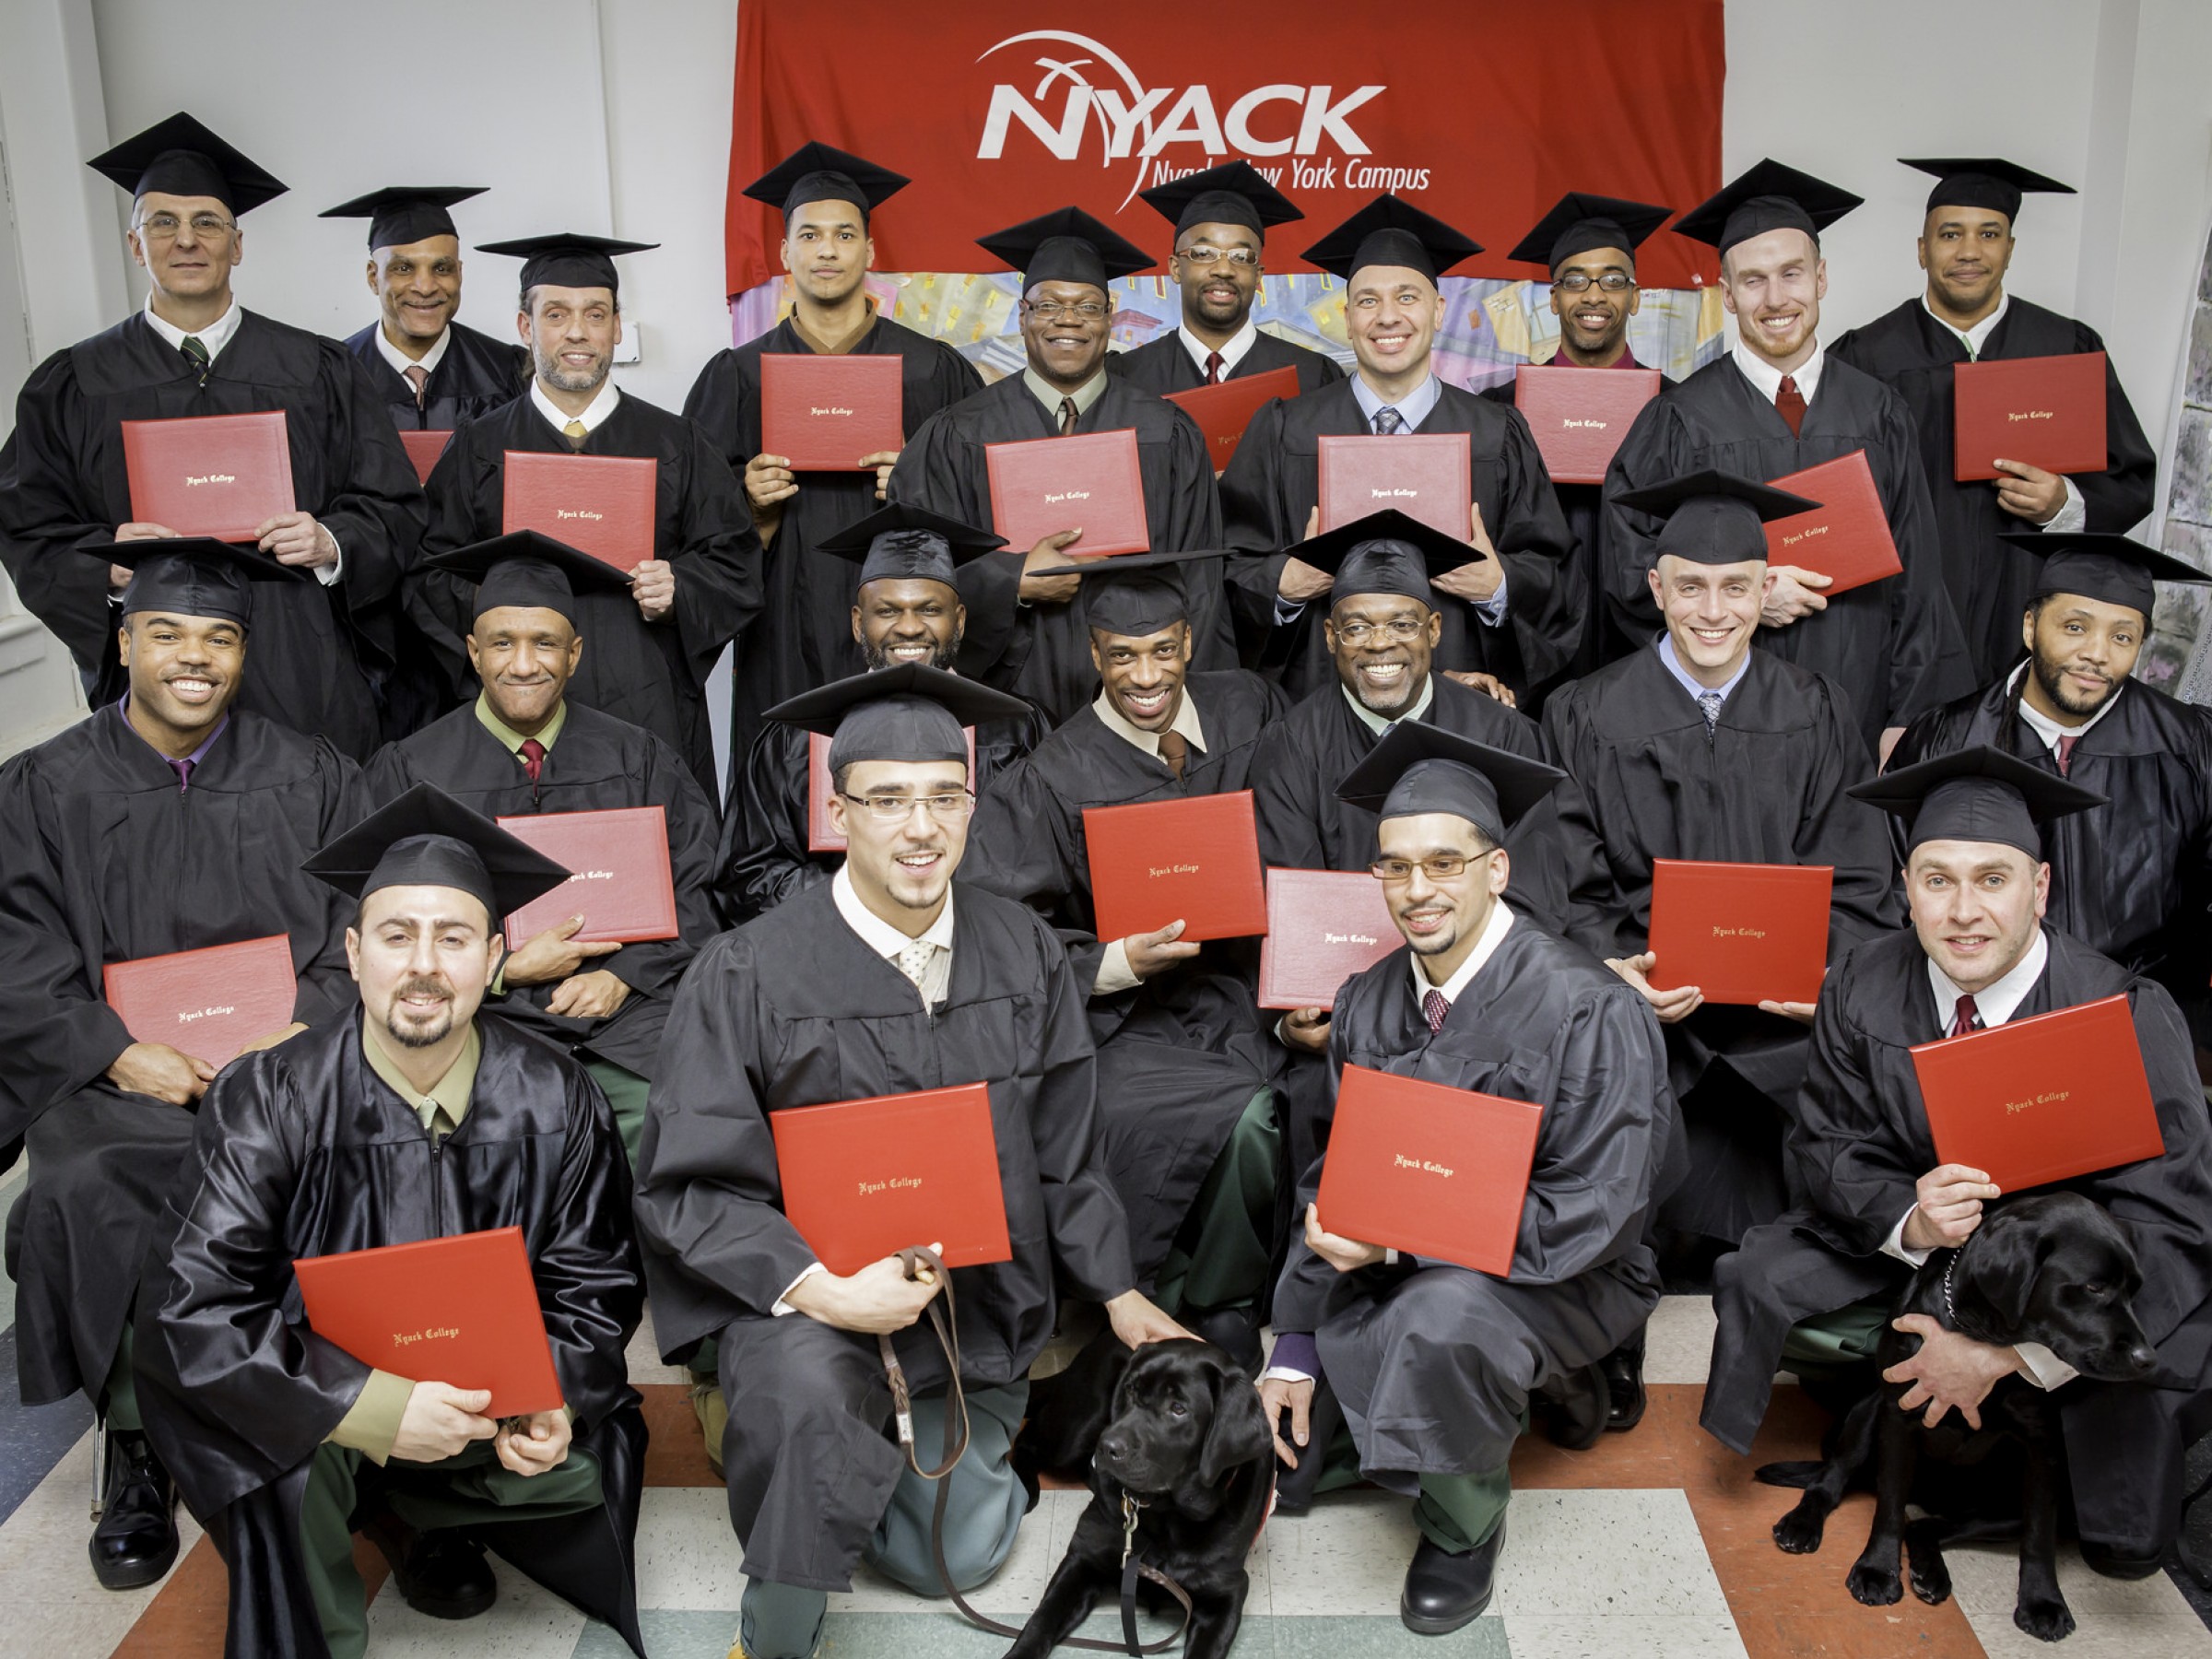 Hudson Link graduates pose for a group photos with their diplomas